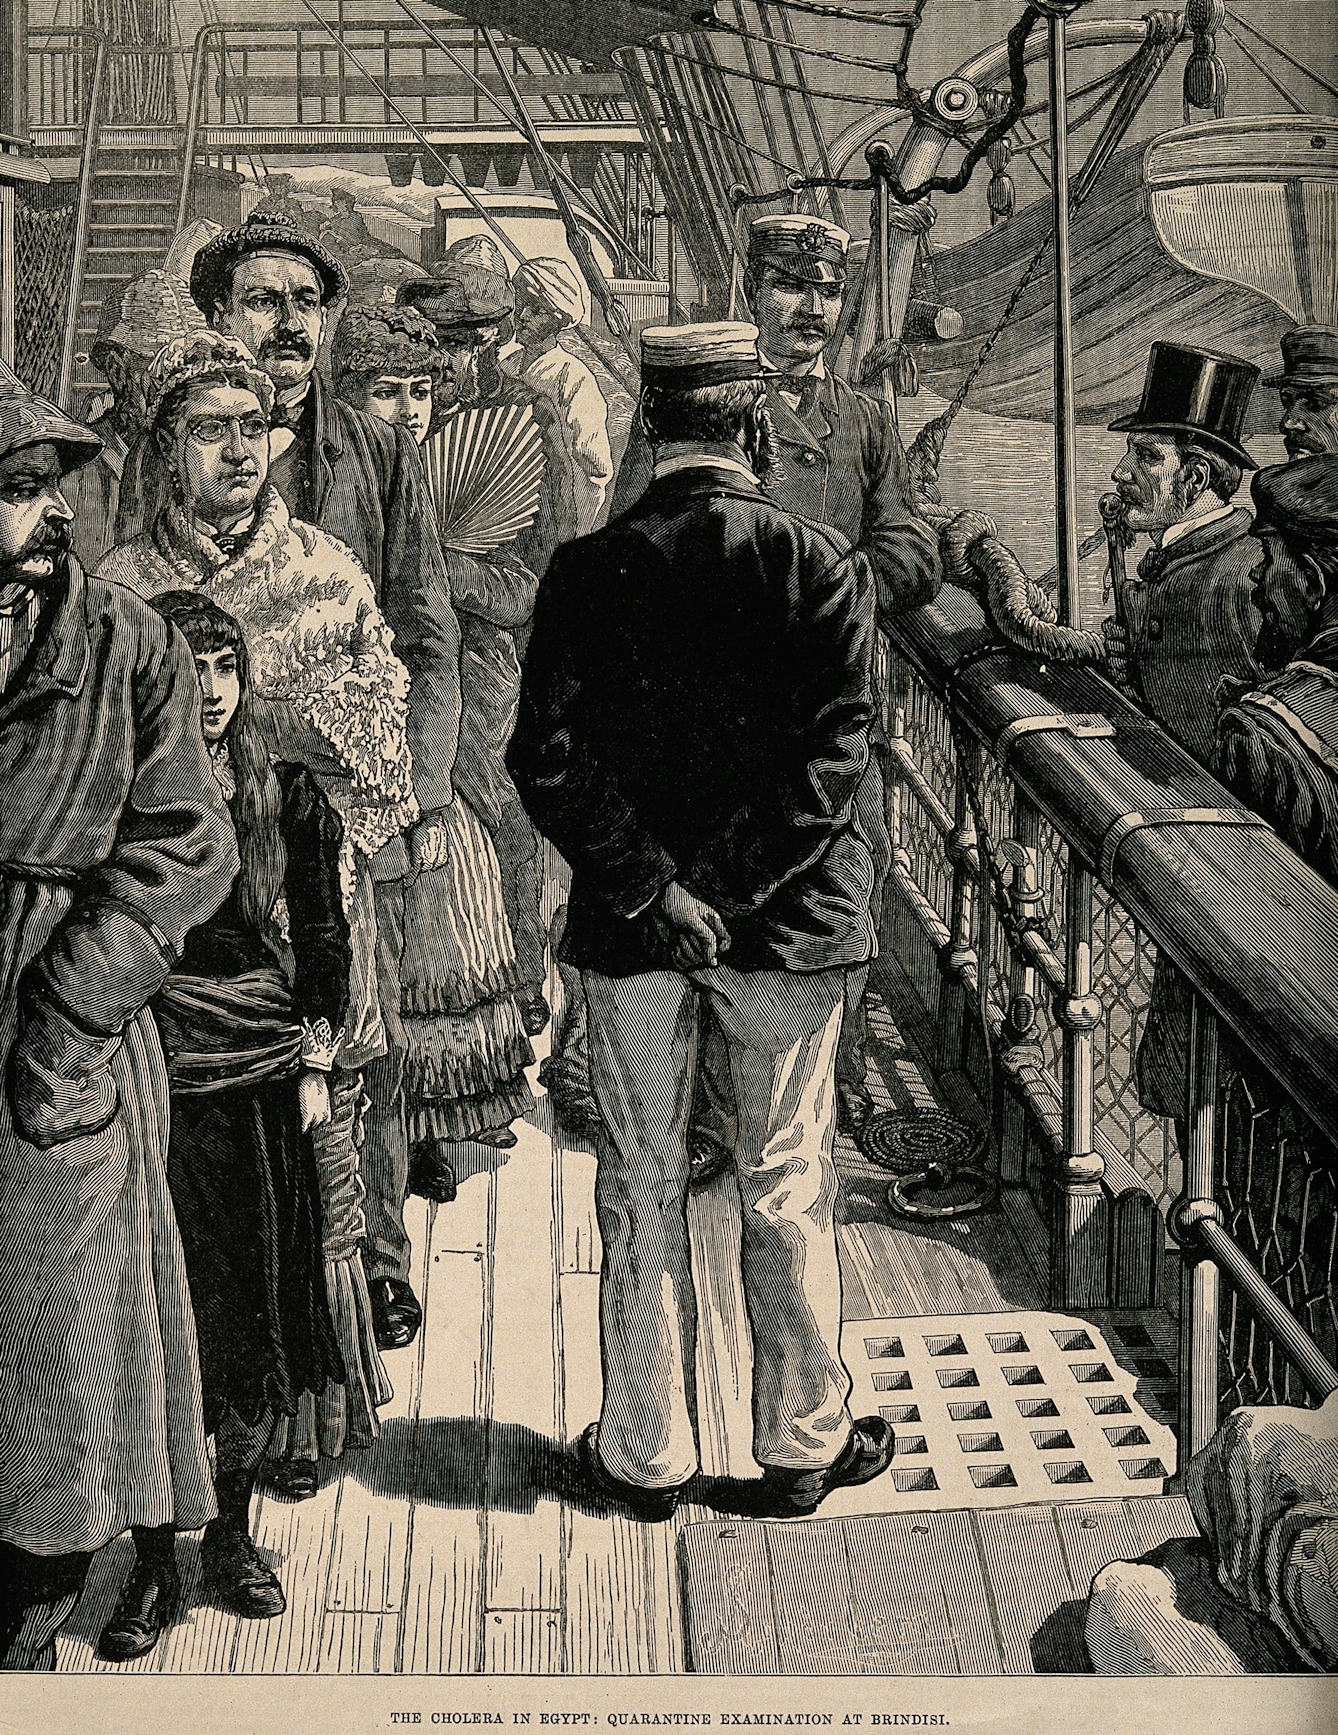 A ship in Brindisi, Italy during a quarantine examination for cholera, 1883